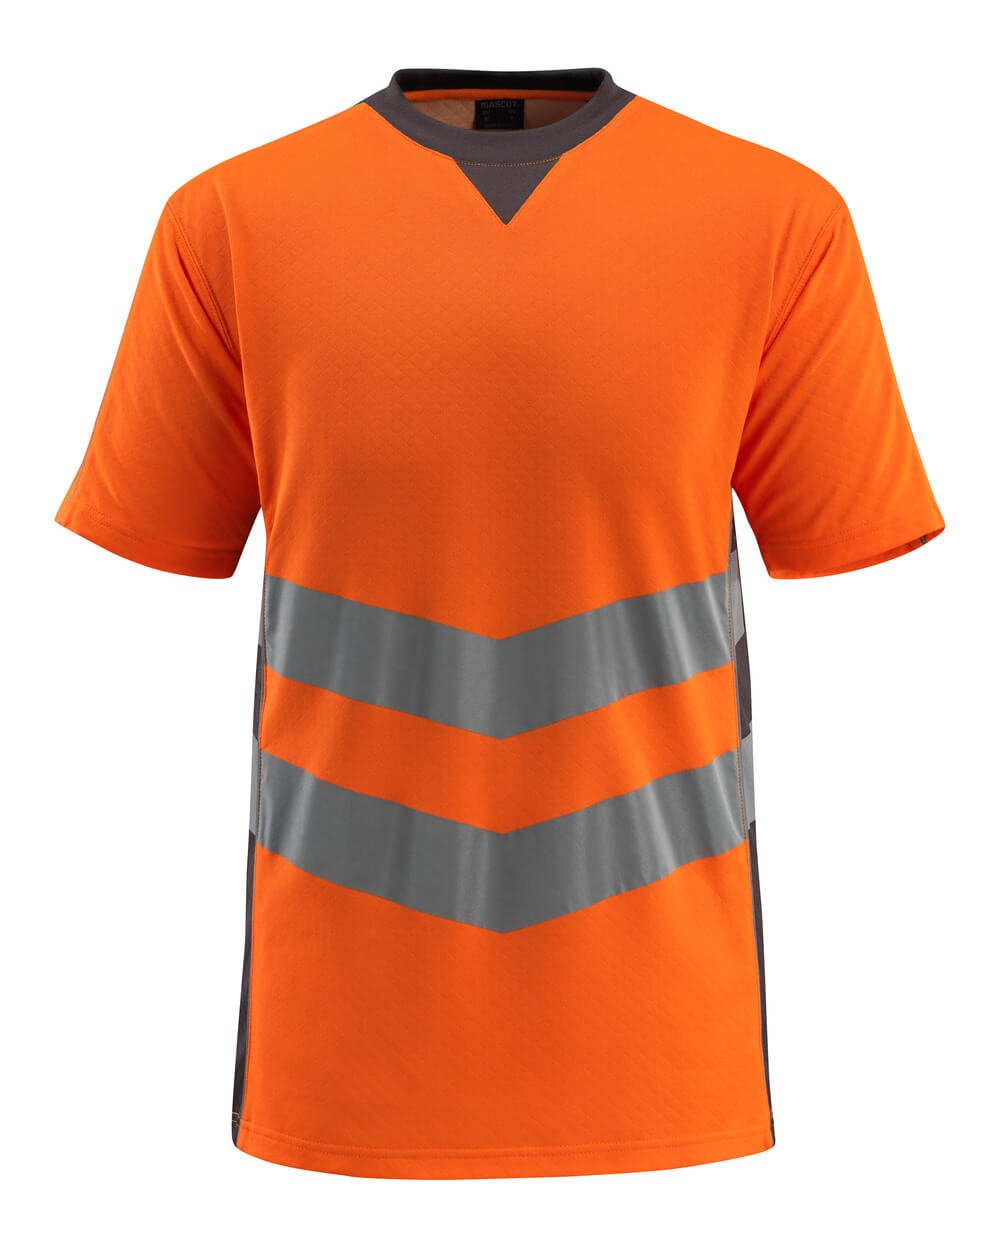 Mascot SAFE SUPREME  Sandwell T-shirt 50127 hi-vis orange/dark anthracite